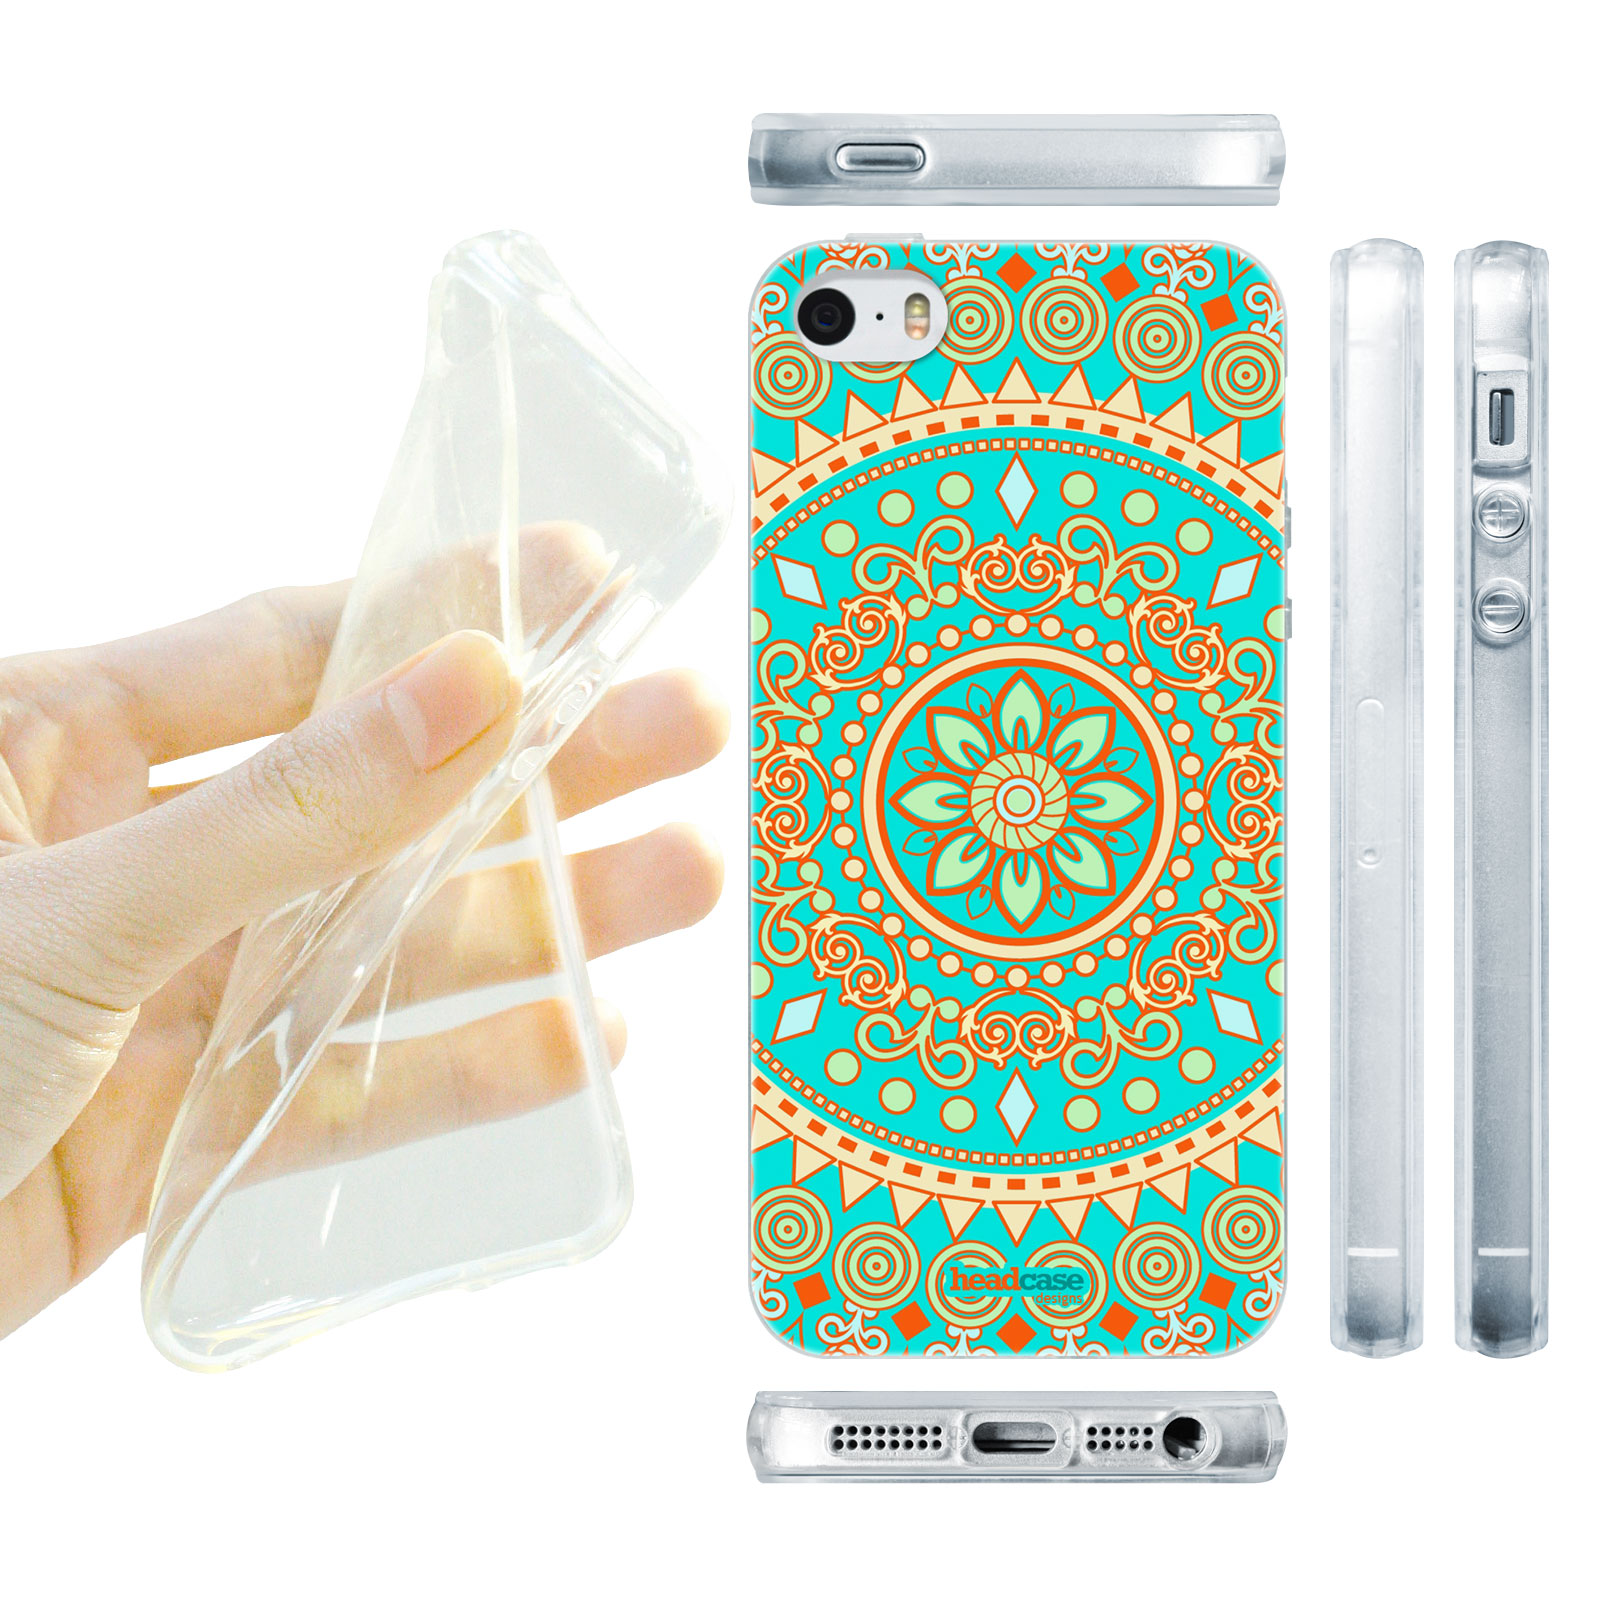 HEAD CASE silikonový obal na mobil Iphone 5/5S  vzor mandala Indie tyrkysová barva